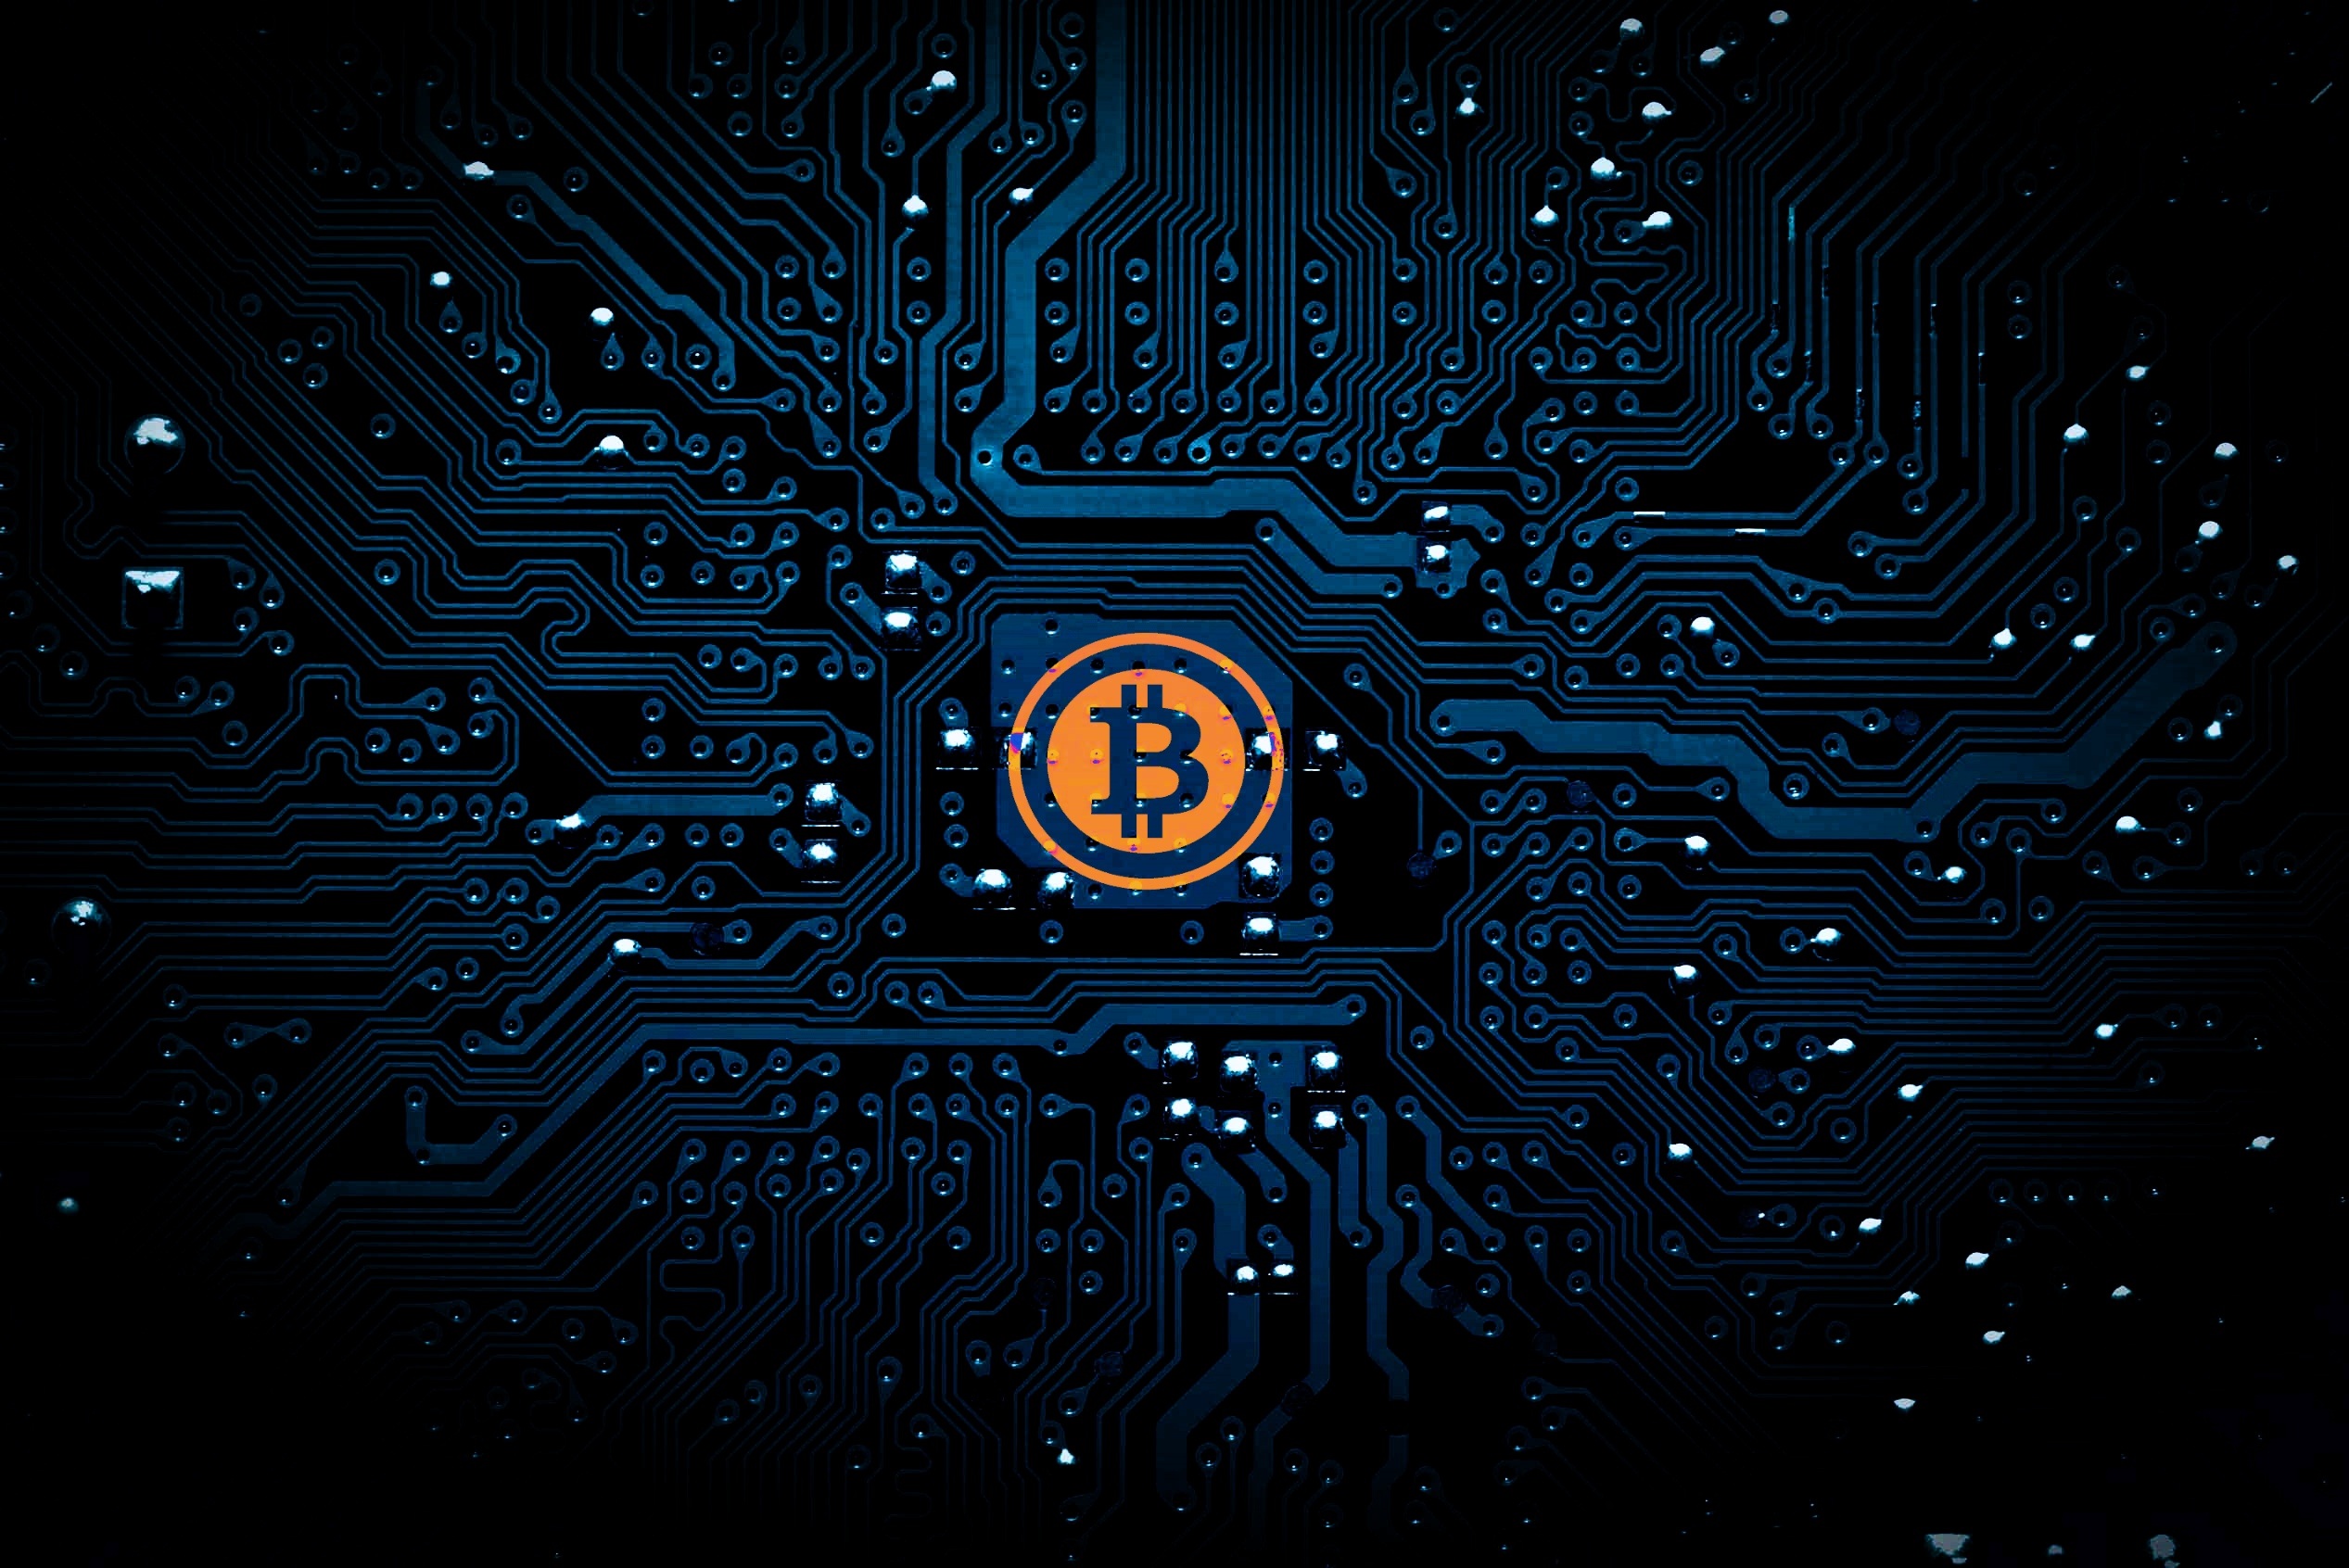 Bitcoin on a Circuit board by Darwin Laganzon